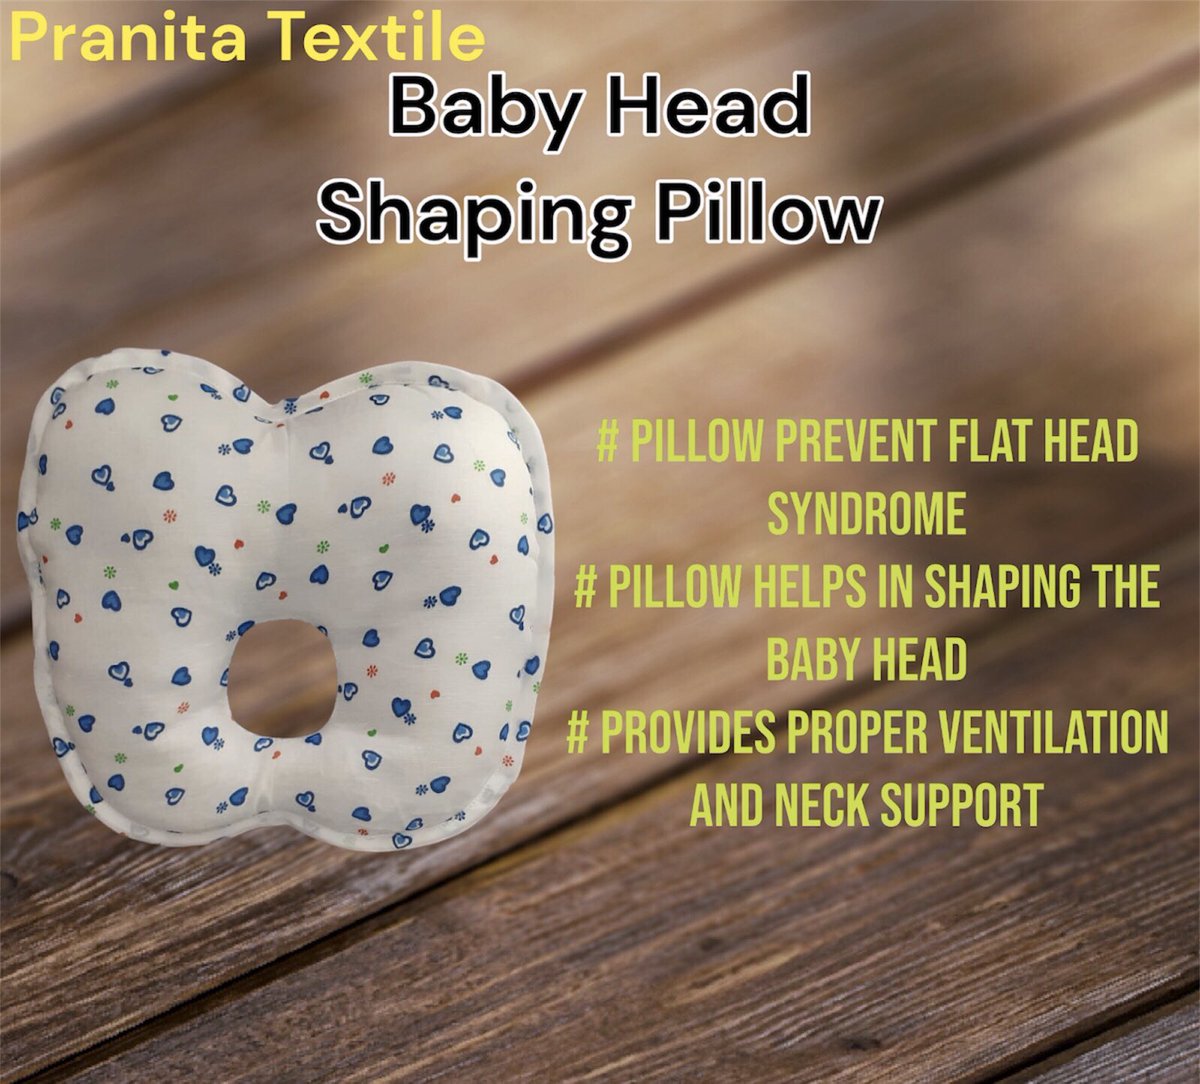 @IndiaMART @tradeindia @GlobalSources @MothercareIN @mothercareuk @BabyOye @MeeMeeIndia @firstcryindia @Babyproductz Hello.. We are manufacturing Baby  Head shaping Pillow.